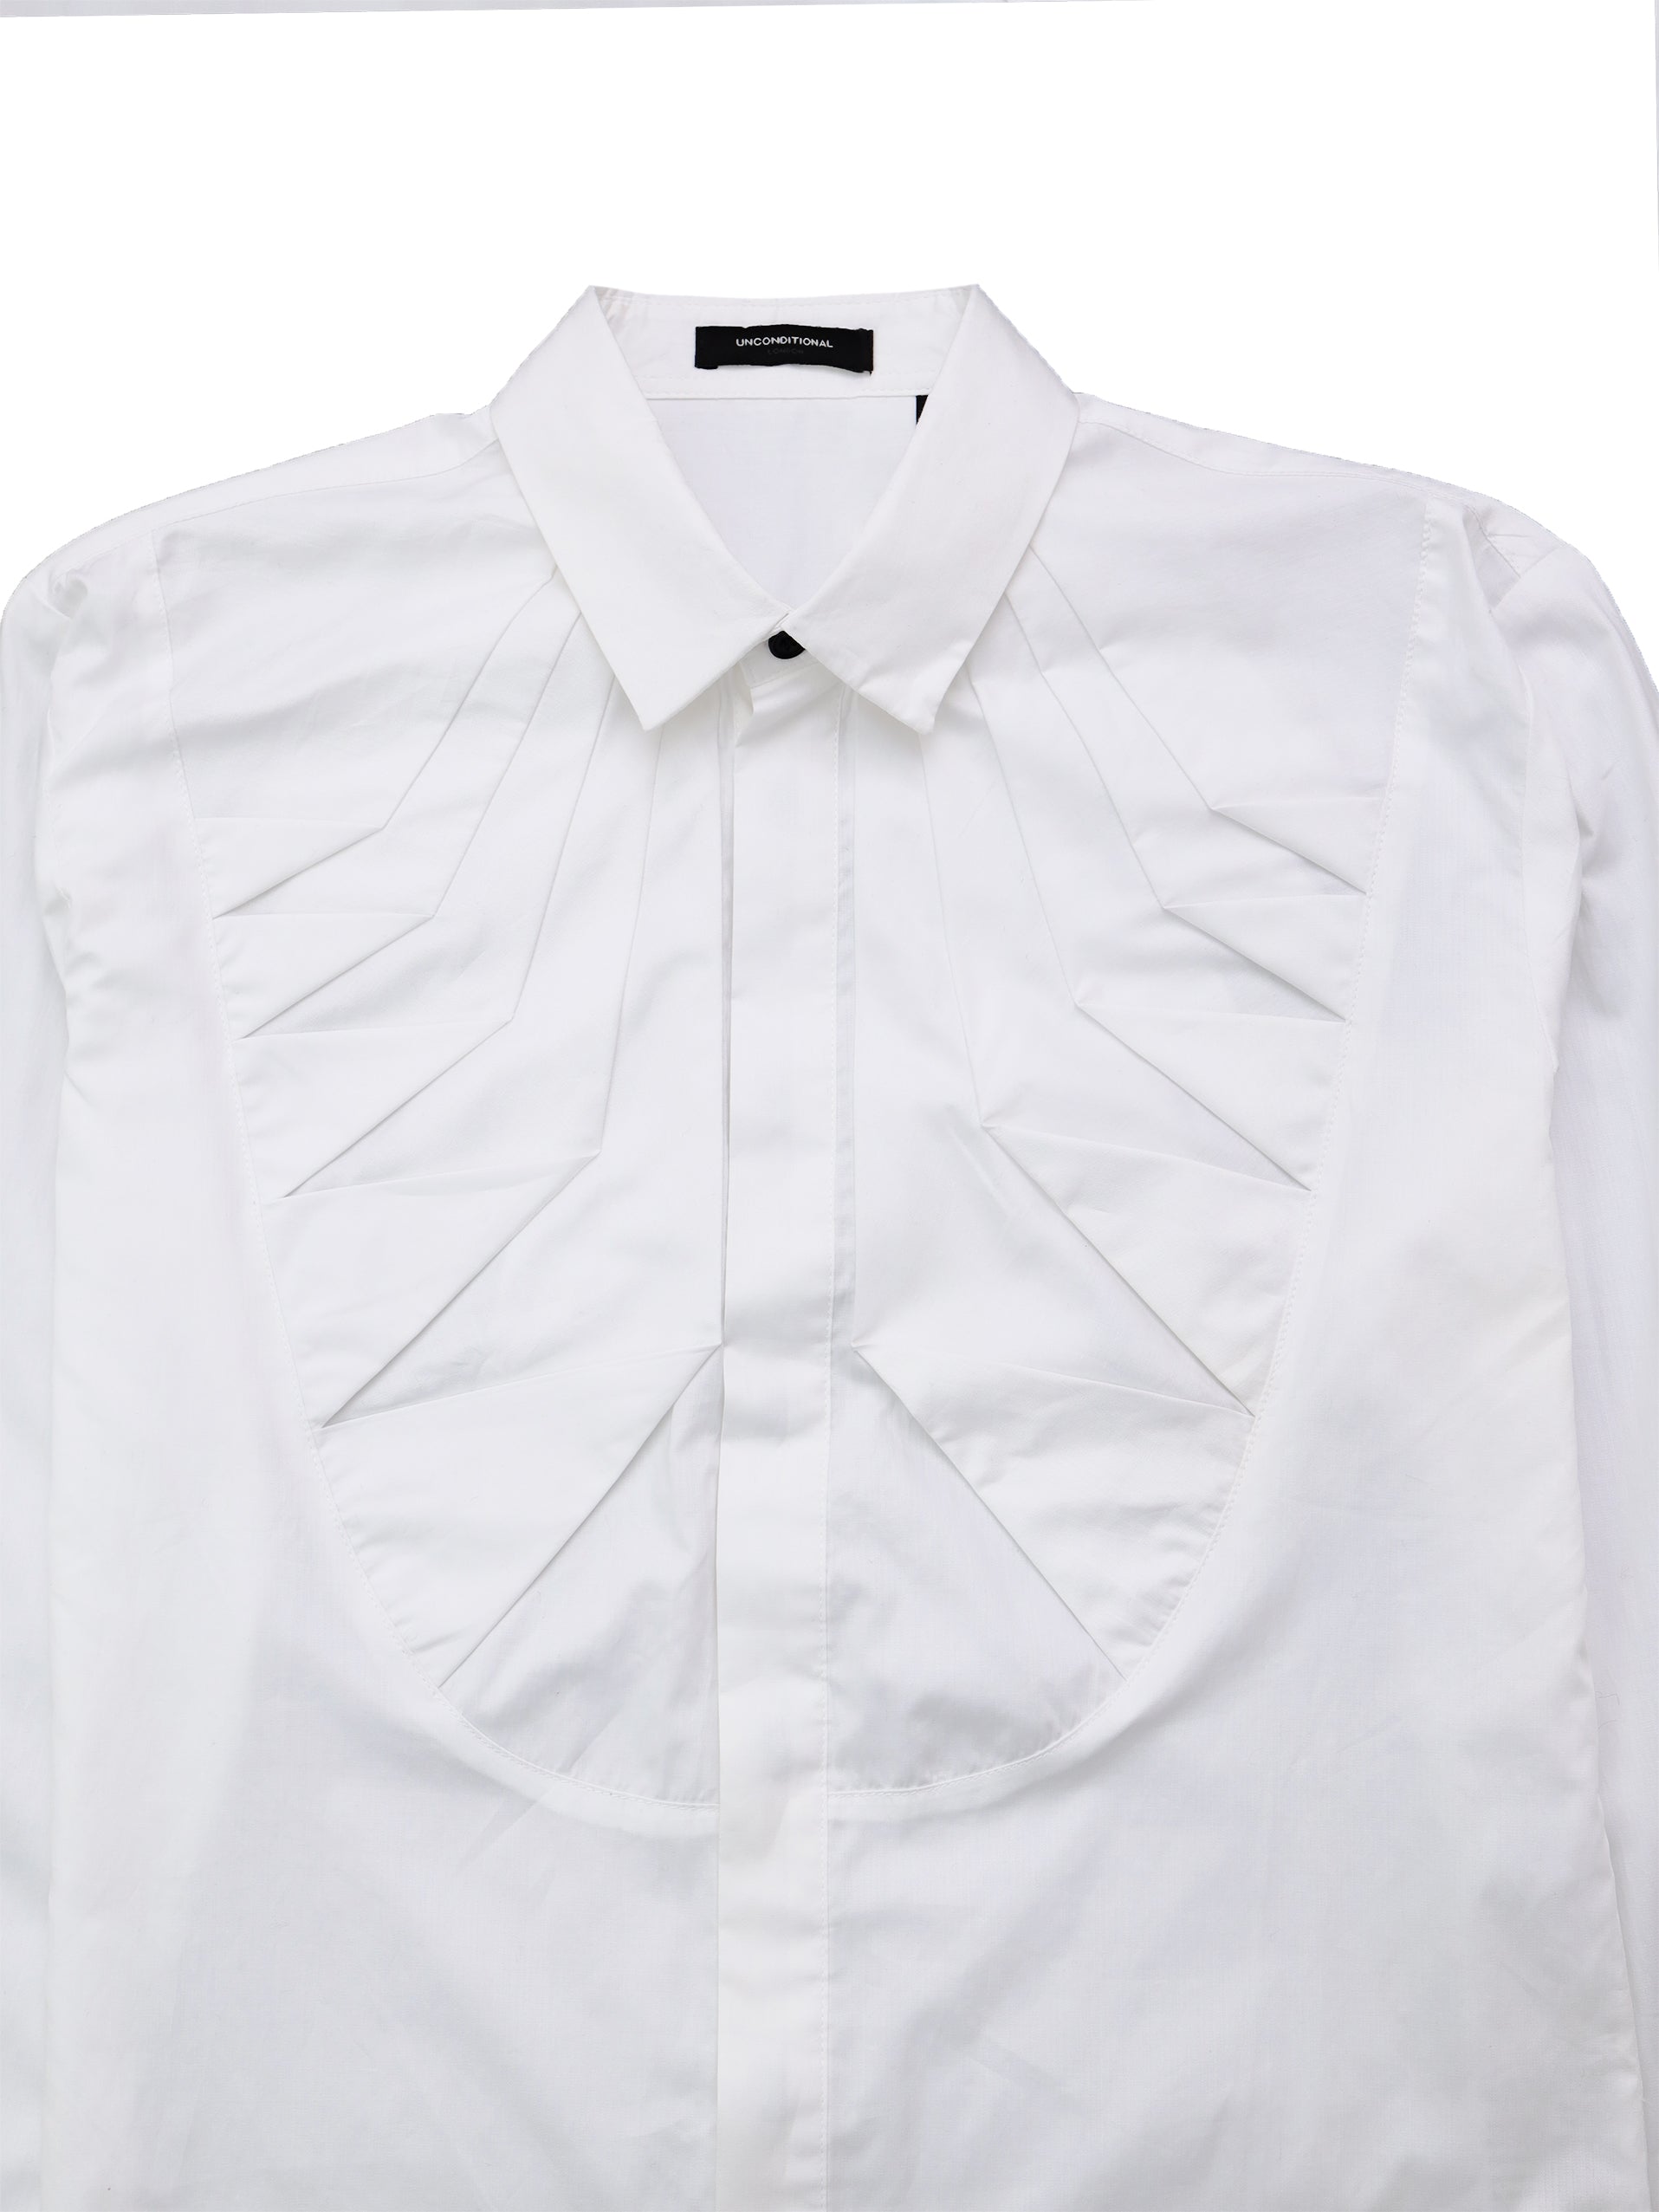 White Pleat Patterned Shirt